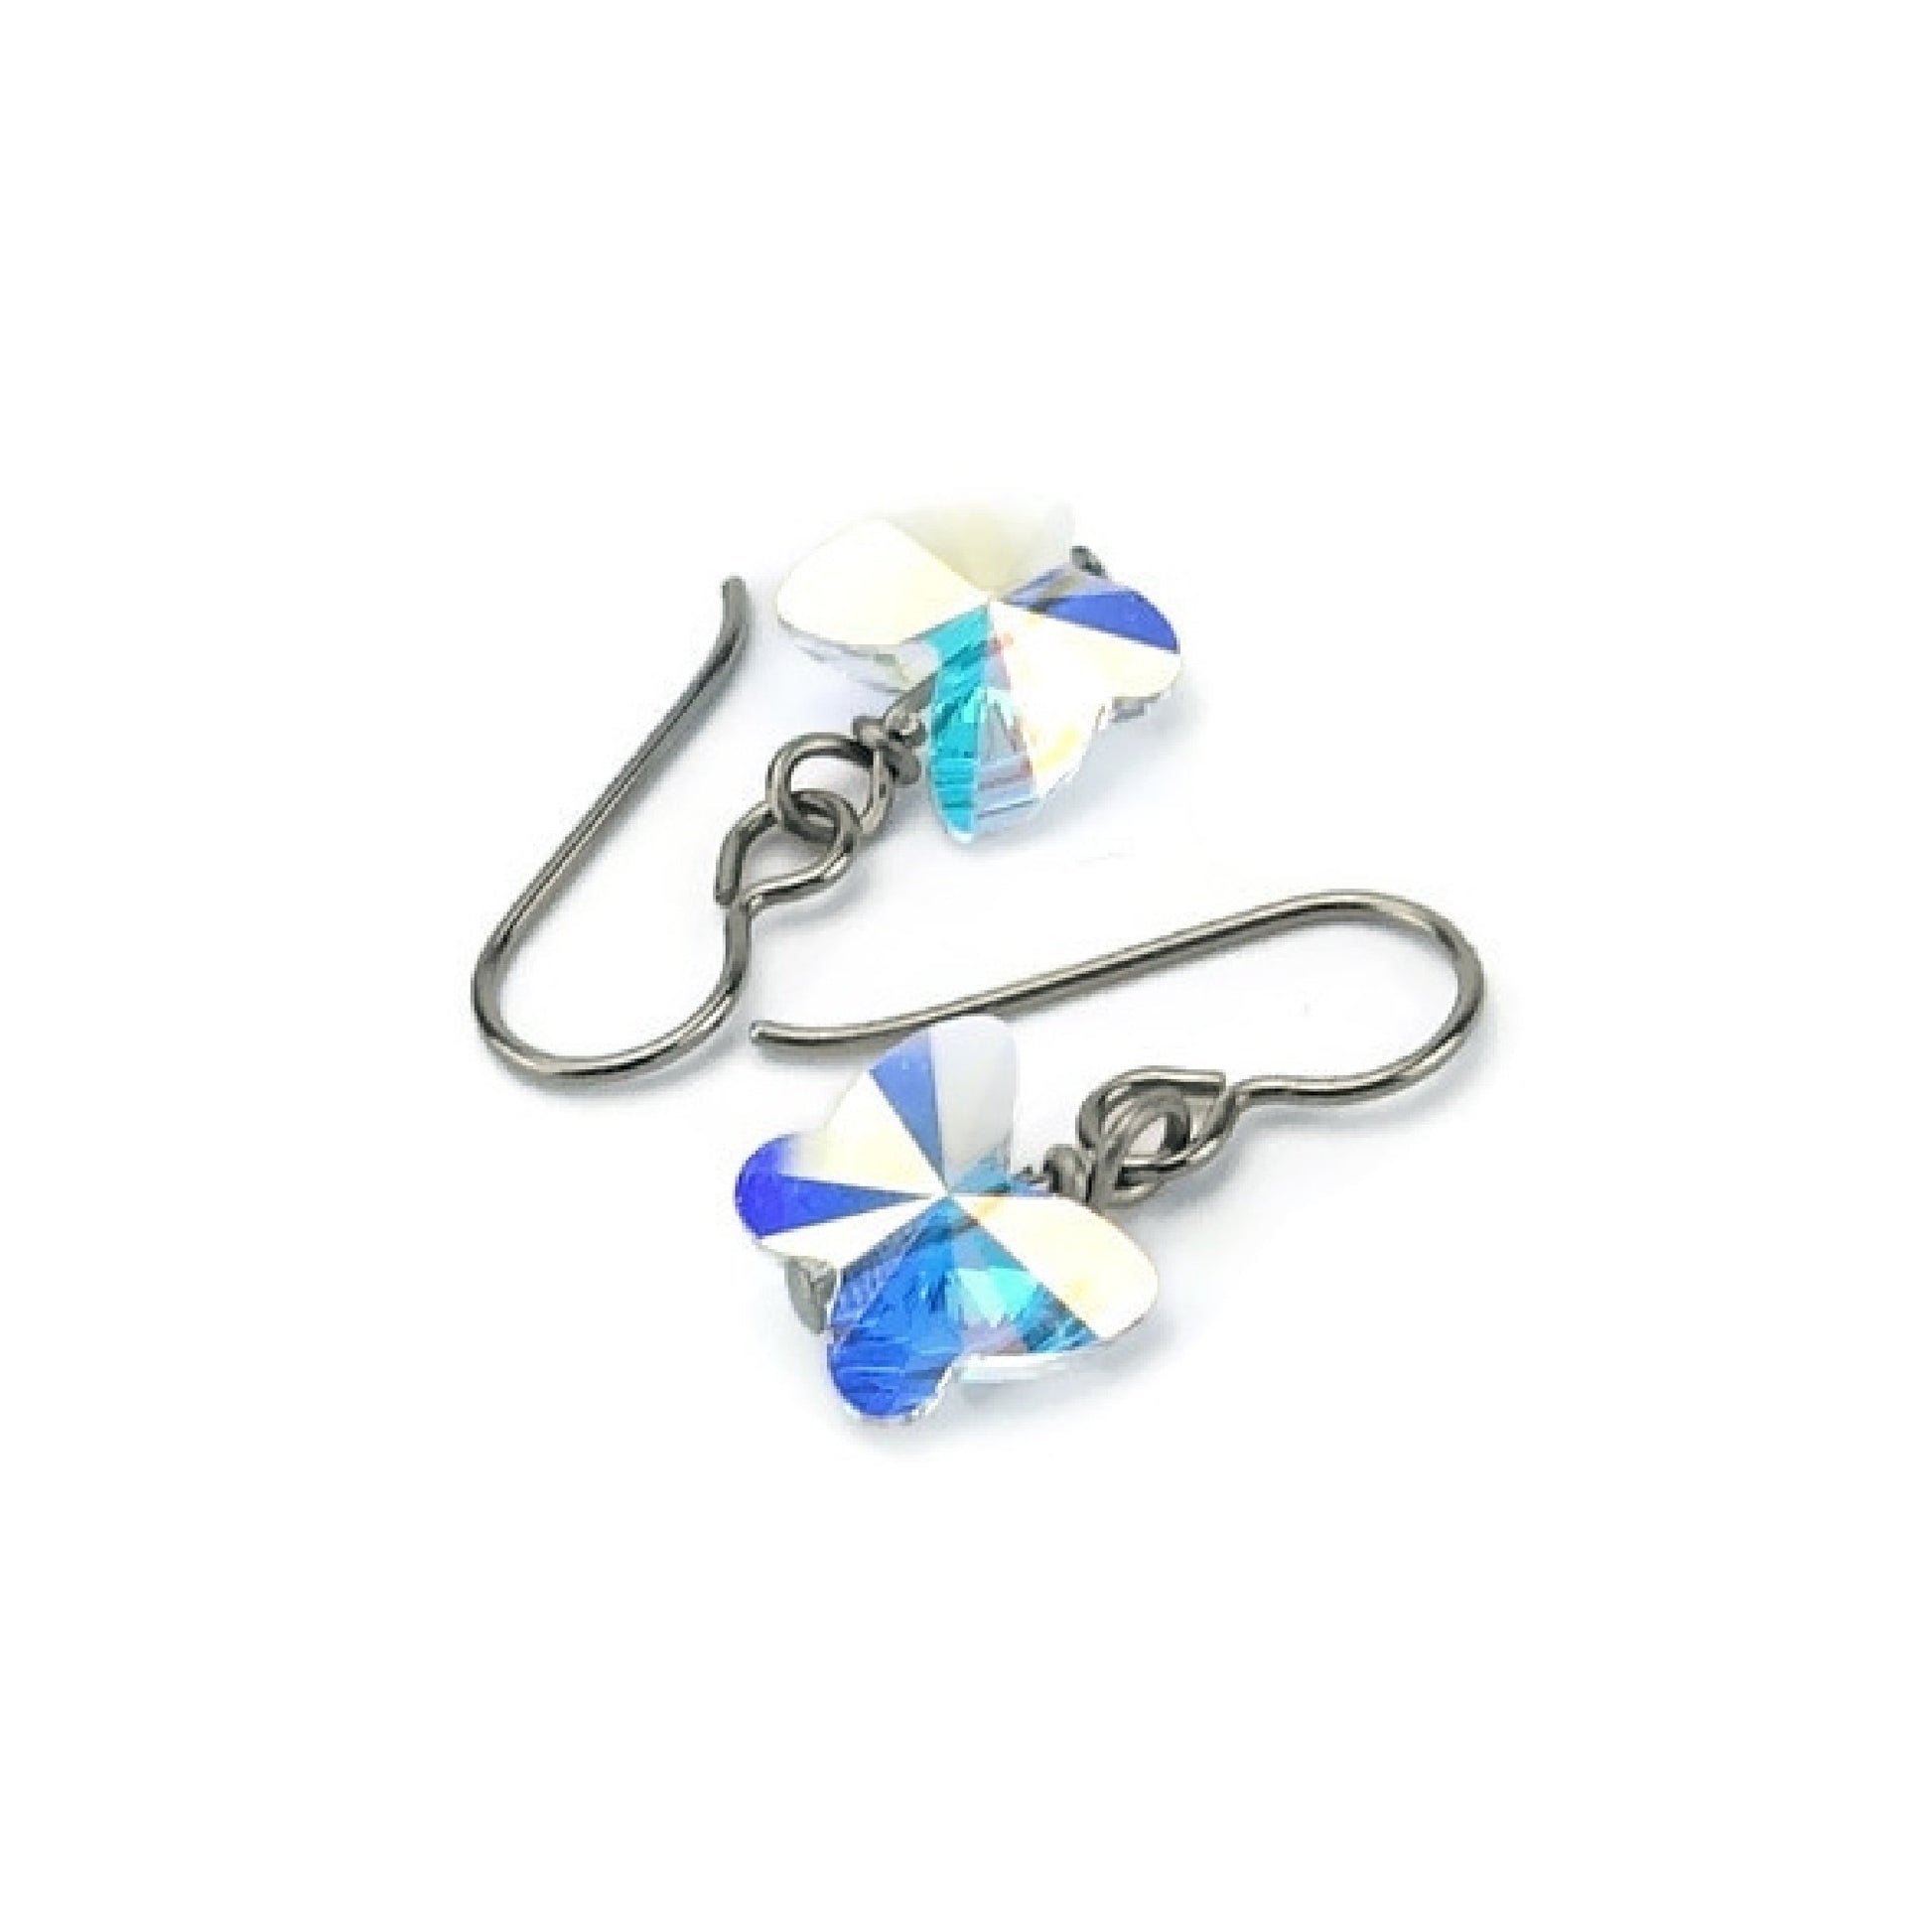 Titanium Earrings Aurora Borealis Crystal Butterfly, Clear Aurora Borealis Crystal Swarovski Butterfly Sensitive Ears Earrings for Girls